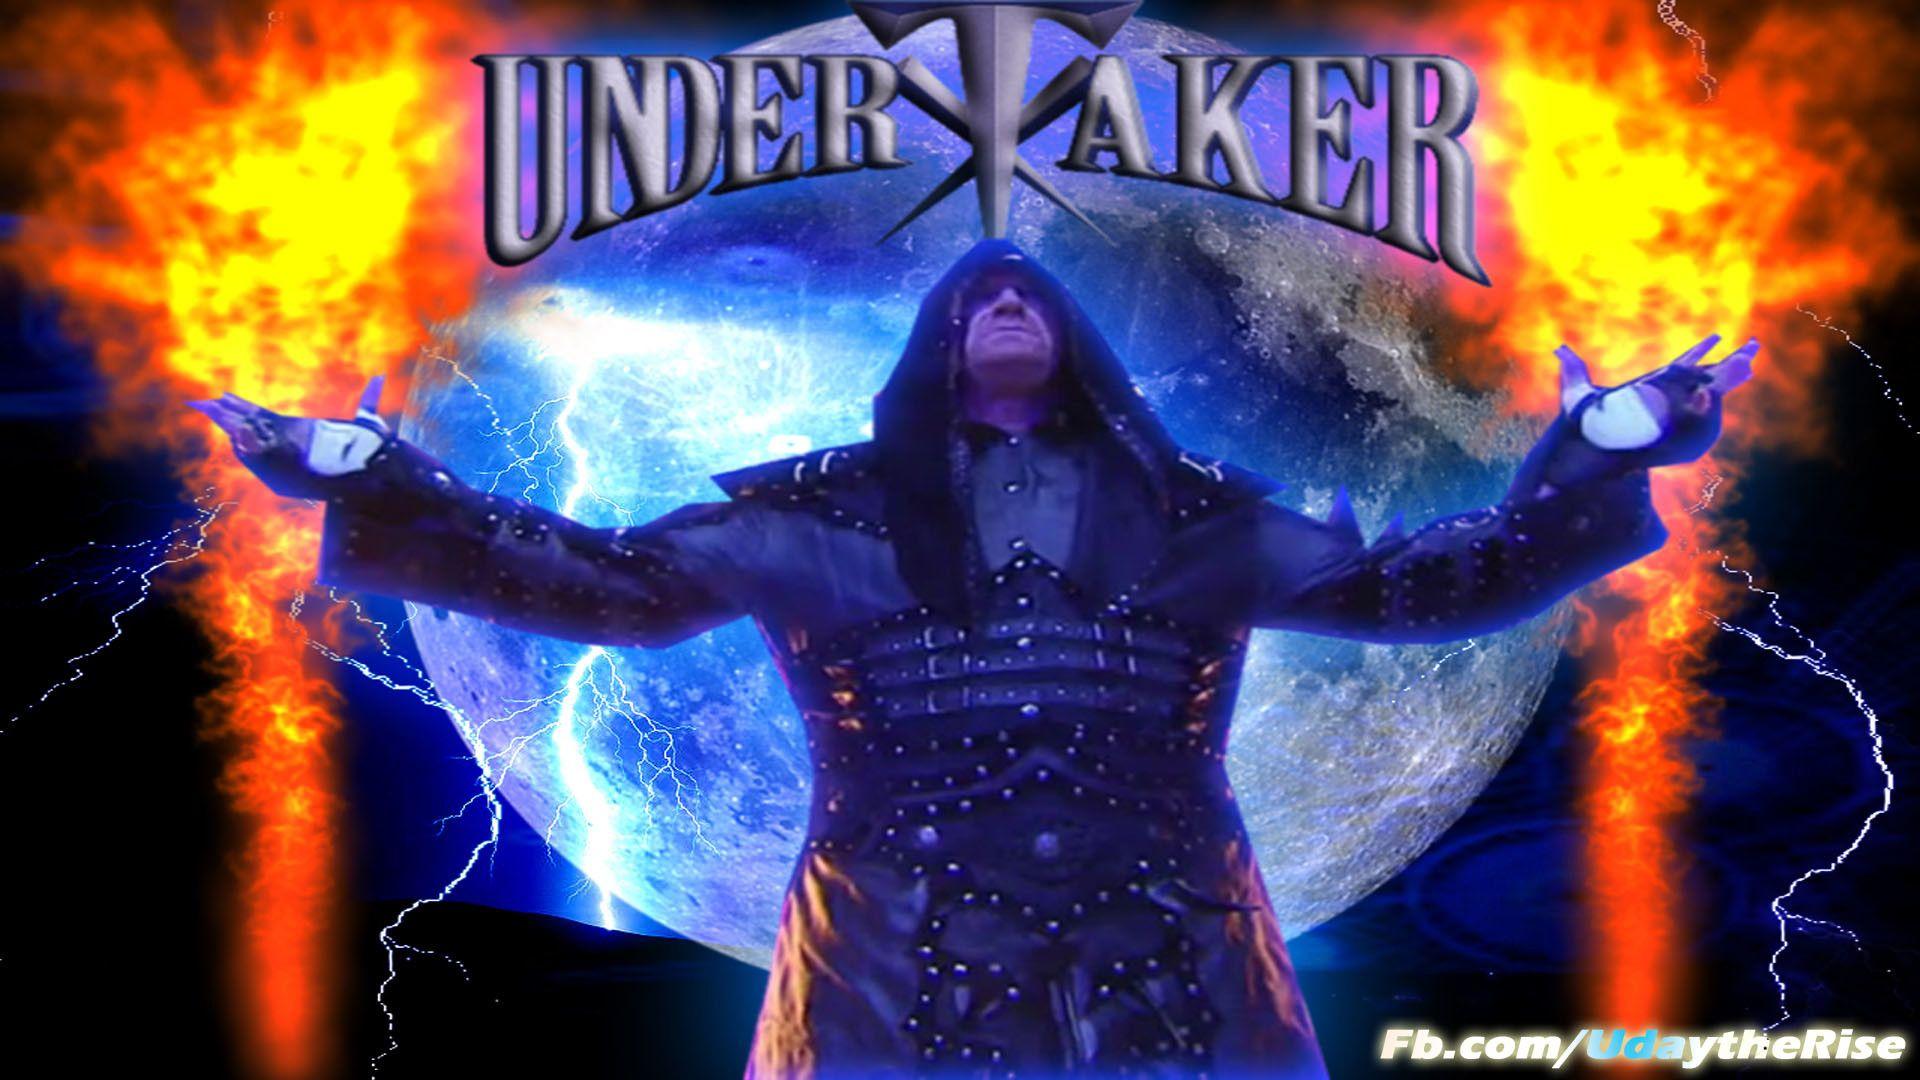 The Undertaker Wallpaper 2018